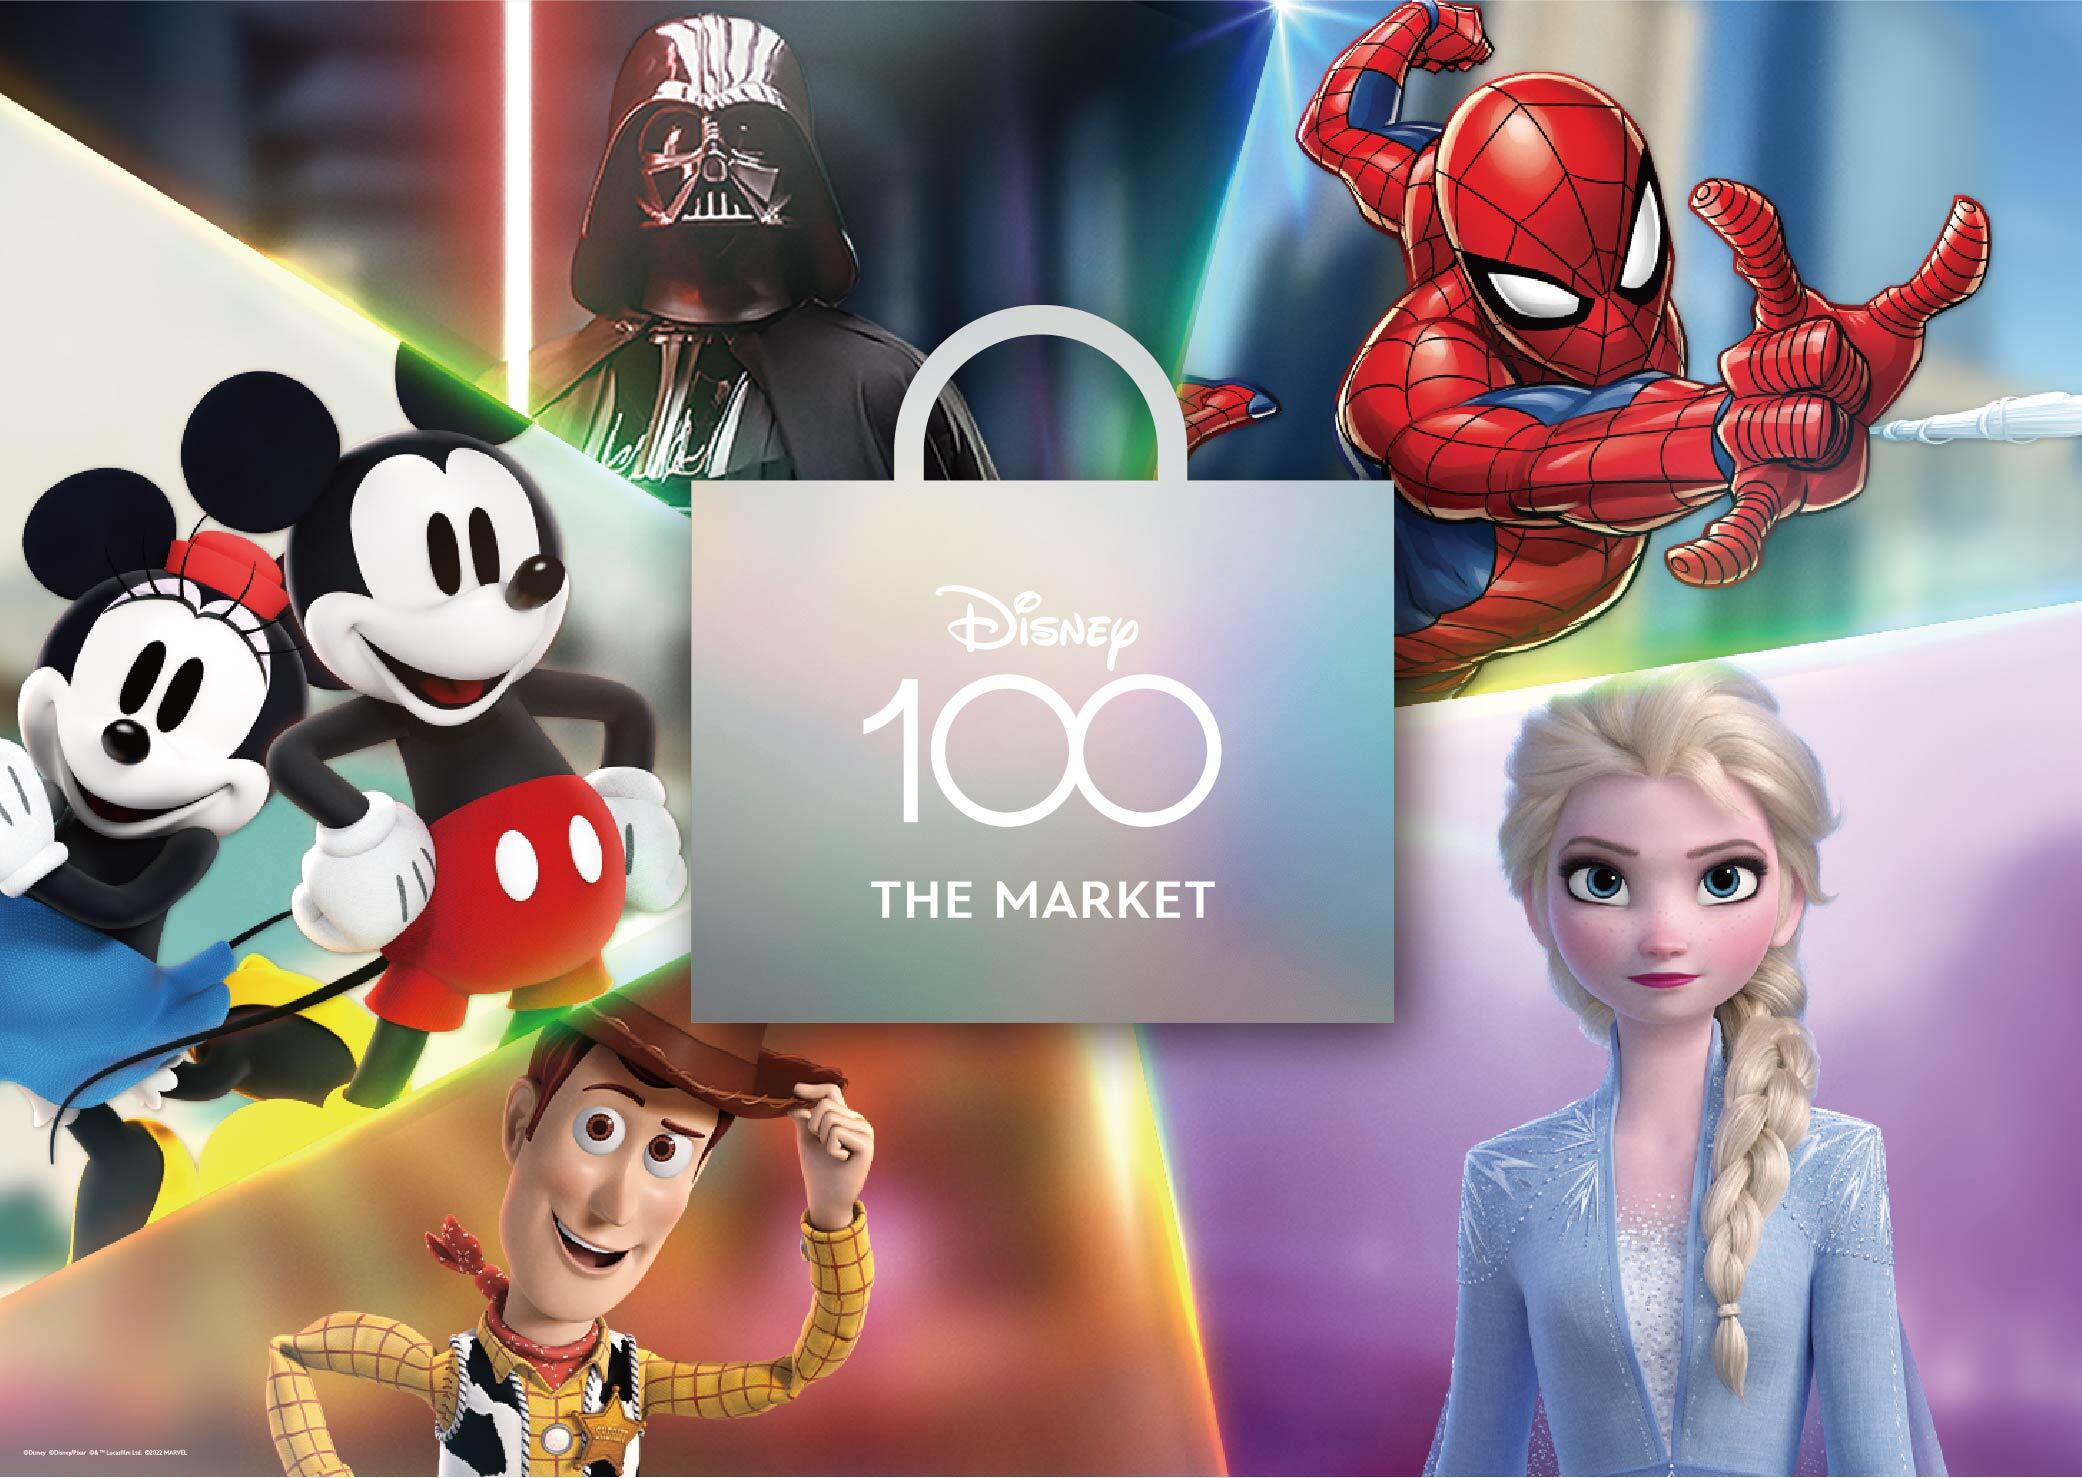 Disney's 100th anniversary! Japan's largest shopping event Disney